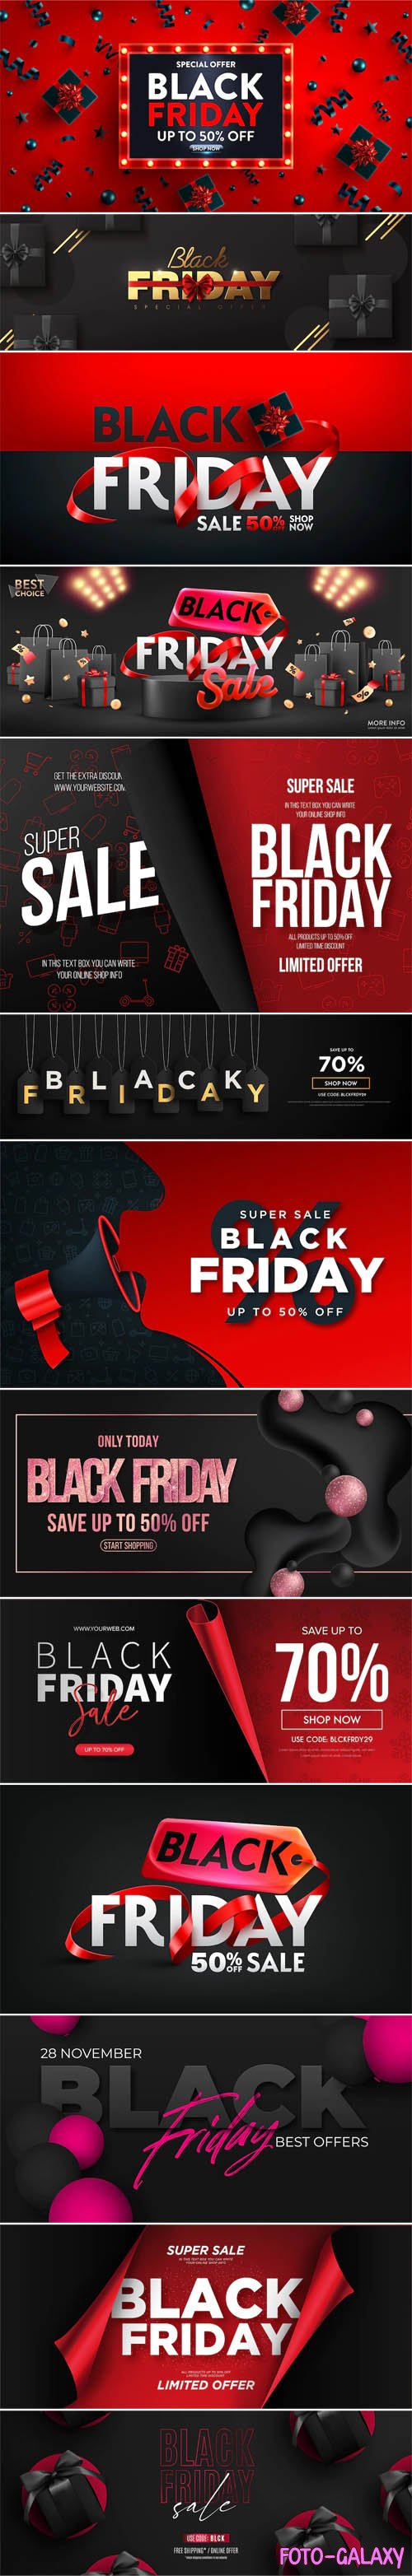 Black Friday - 10+ Web Banners Vector Templates [Vol.4]